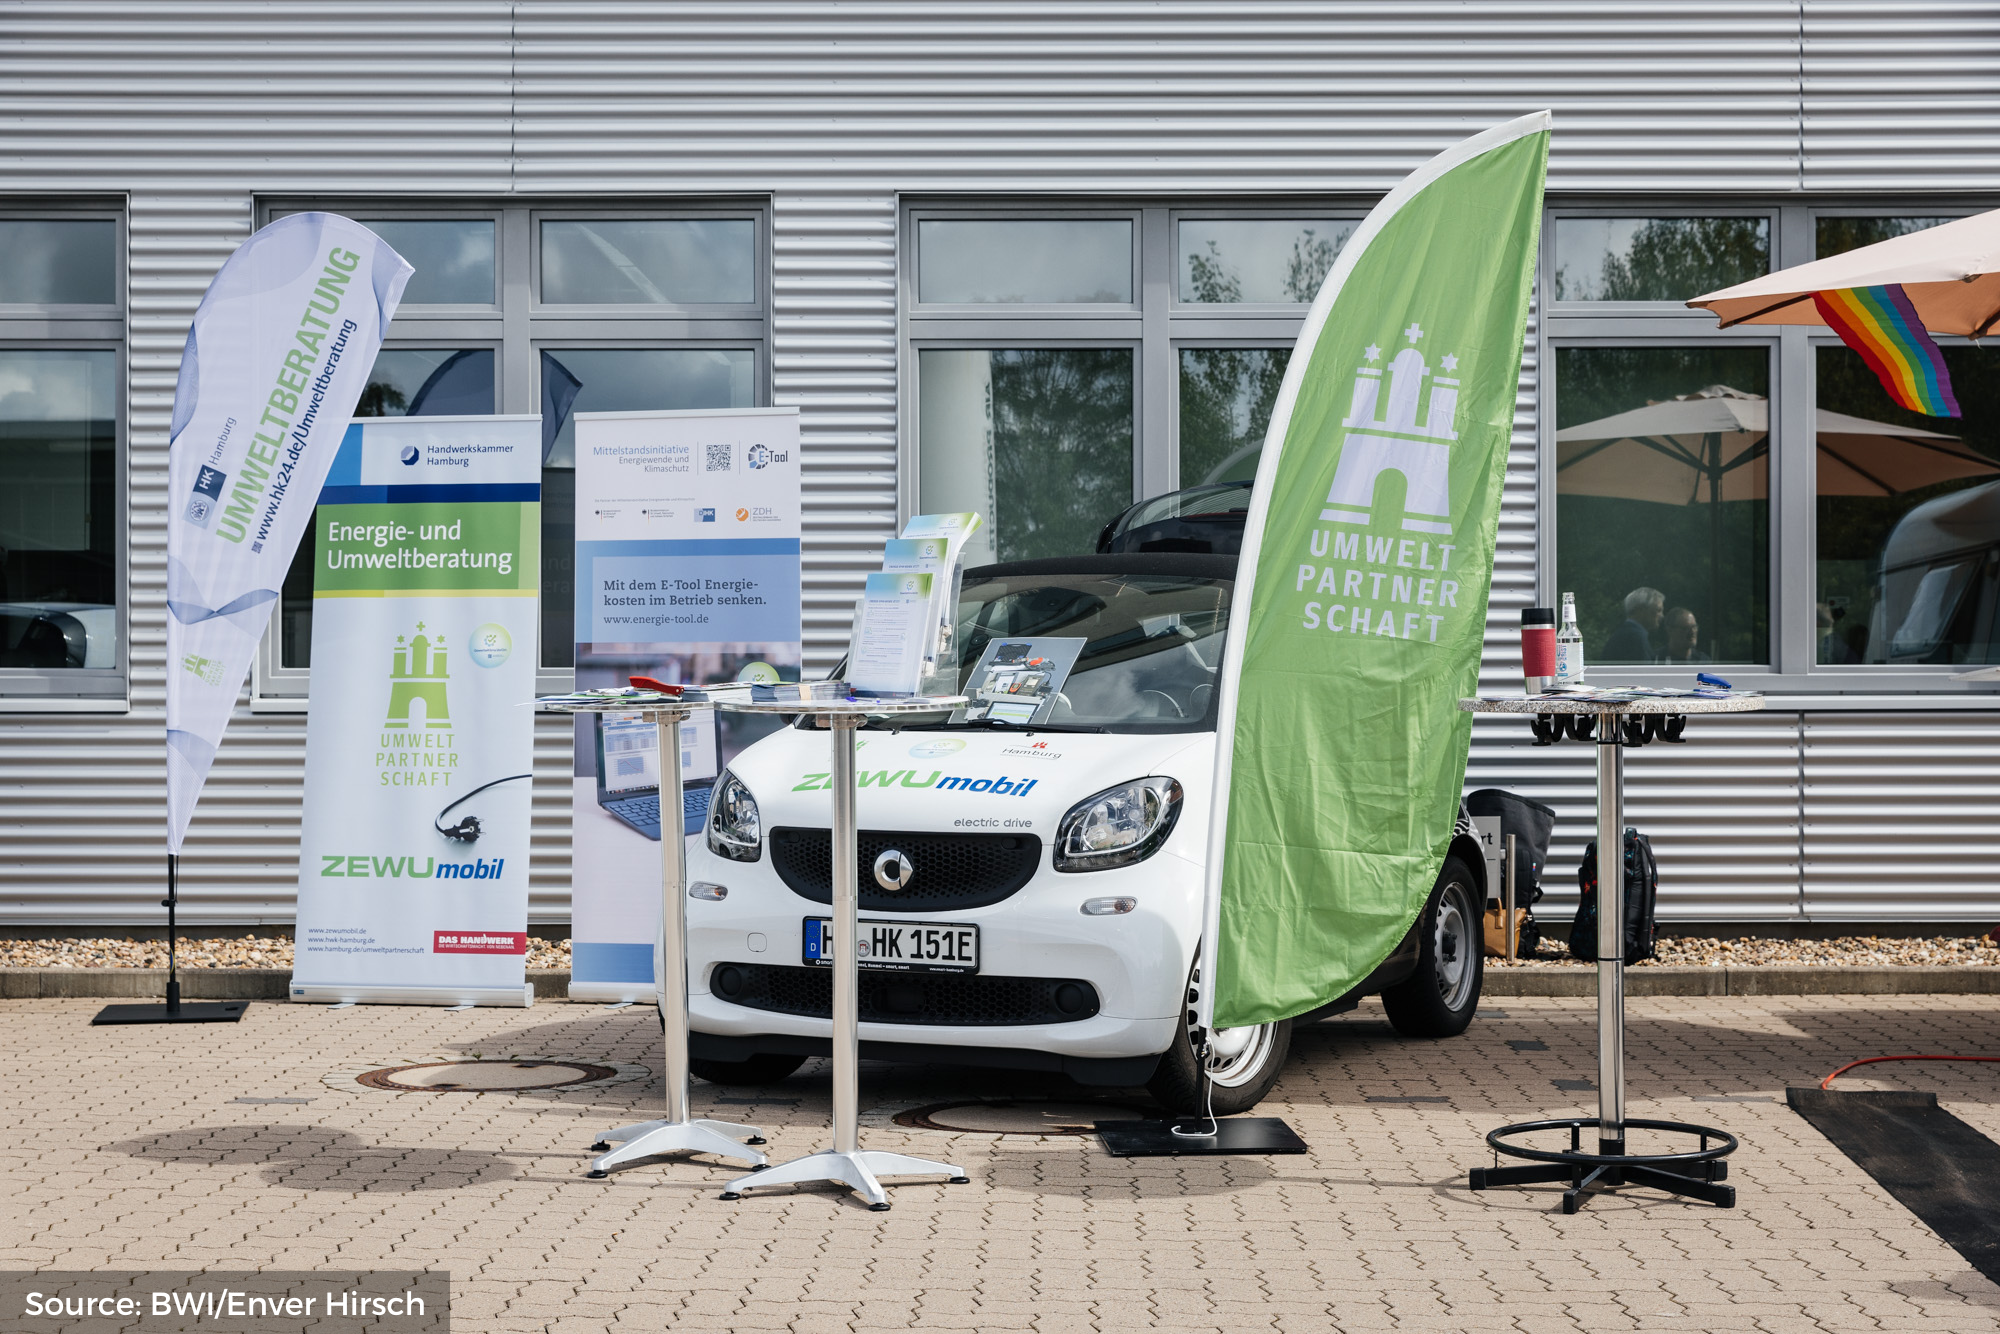 The electric smart car of Umweltpartnershaft Hamburg